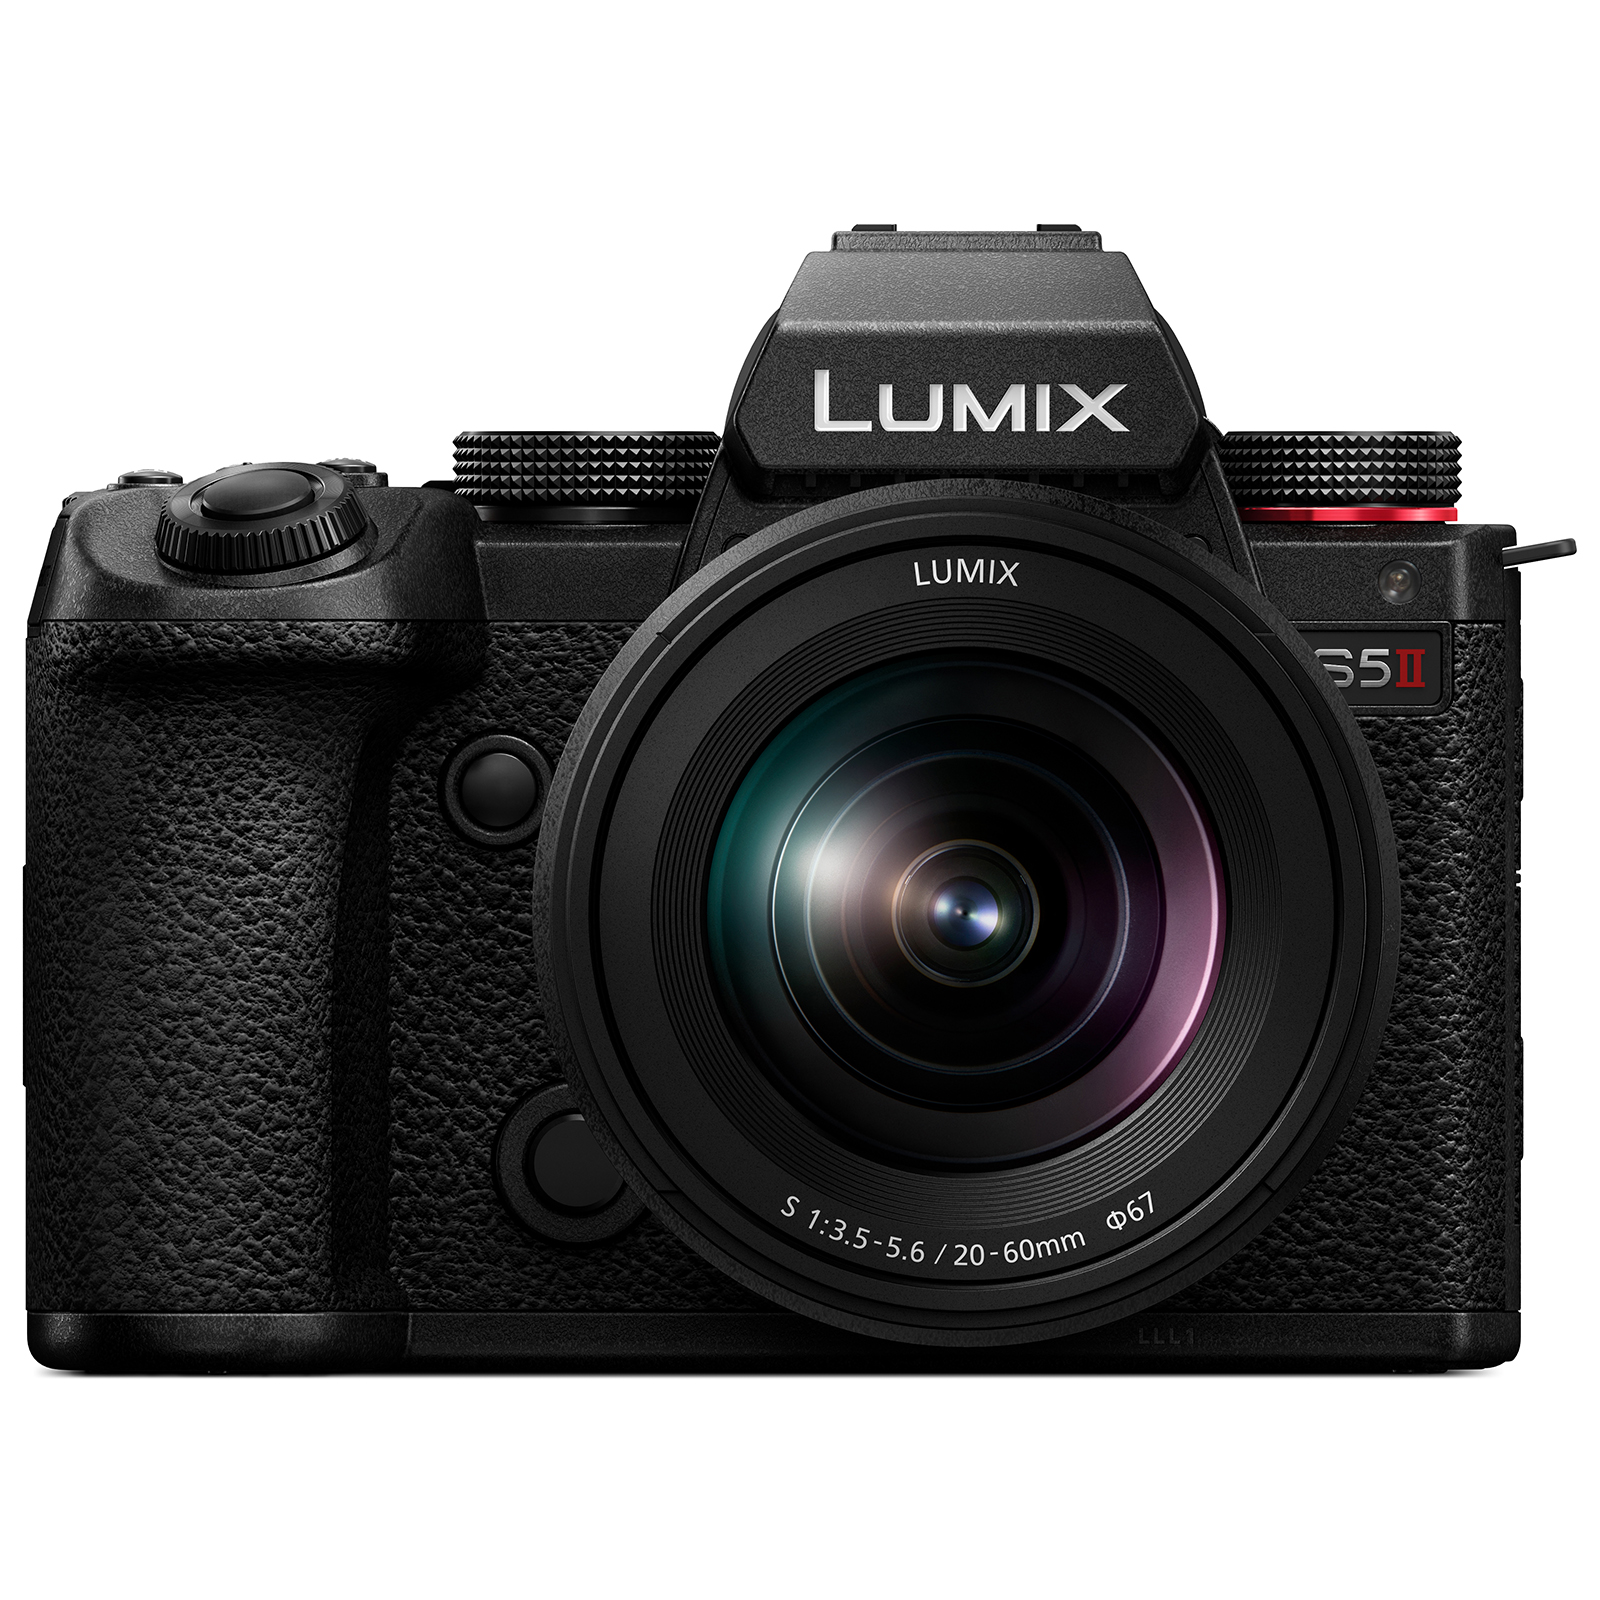 Image of Panasonic Lumix S5 II Digital Camera with 2060mm Lens